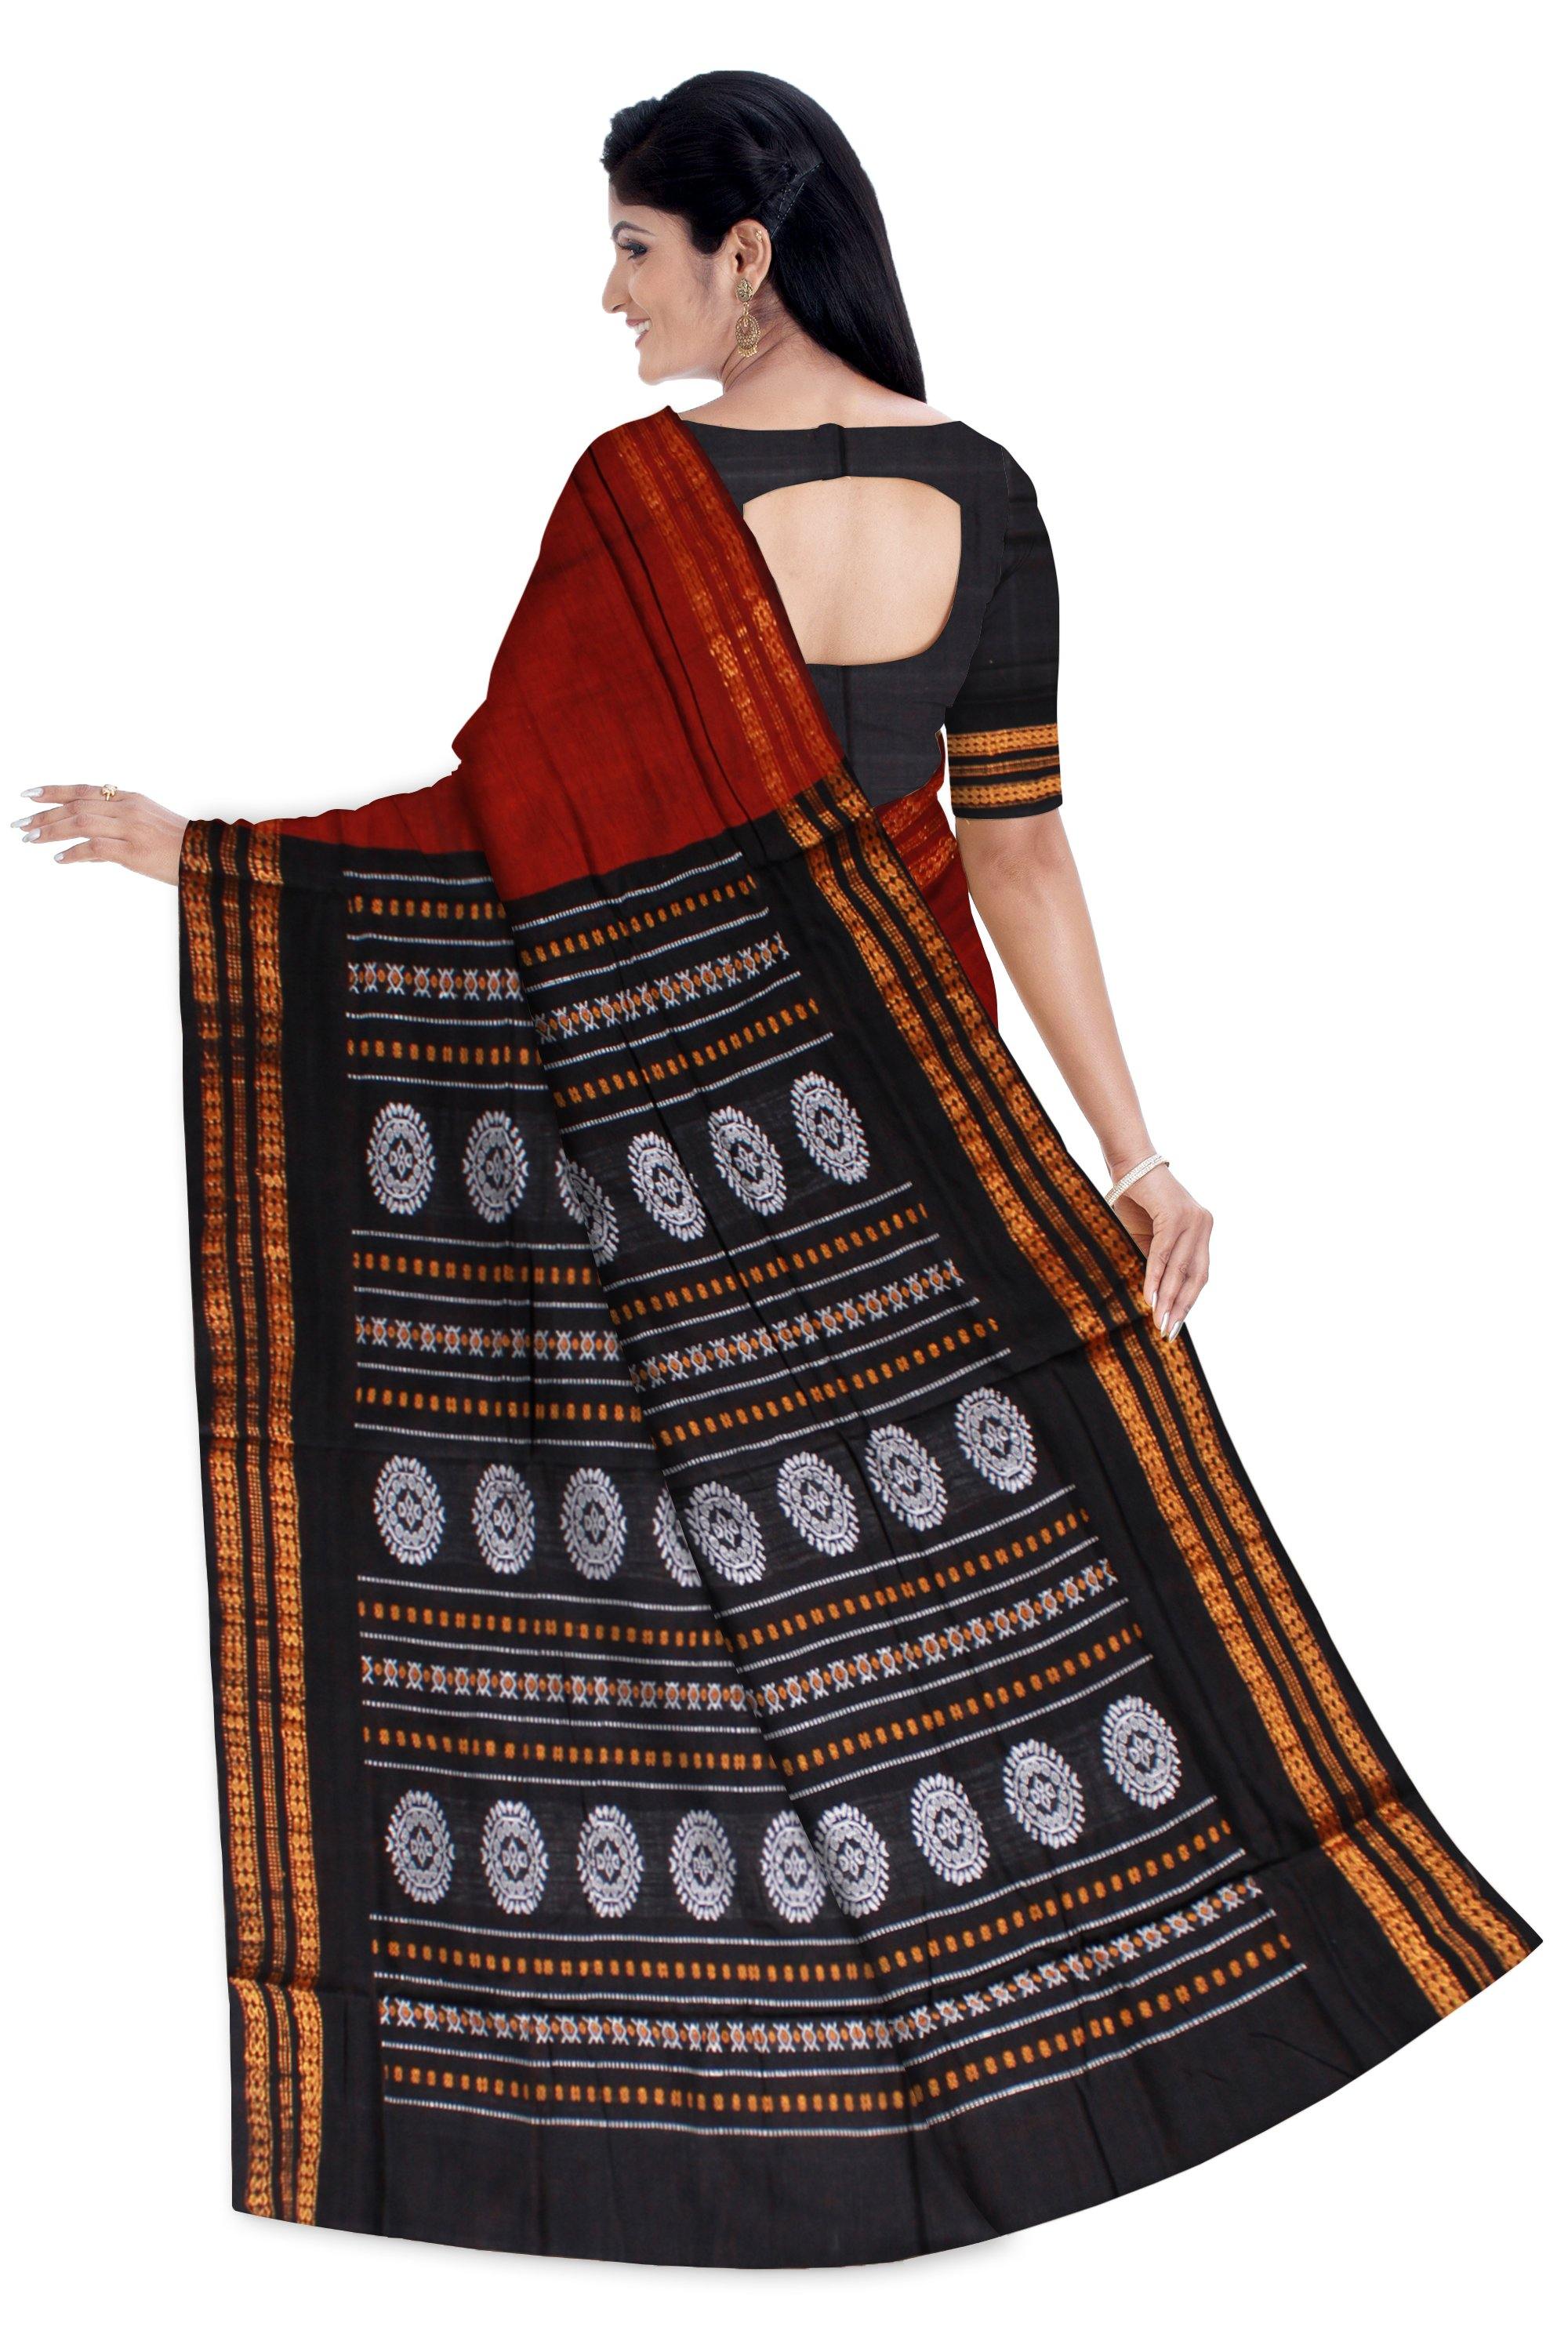 Sambalpuri Bomkei pattern flower print saree in MAROON color without blouse piece - Koshali Arts & Crafts Enterprise